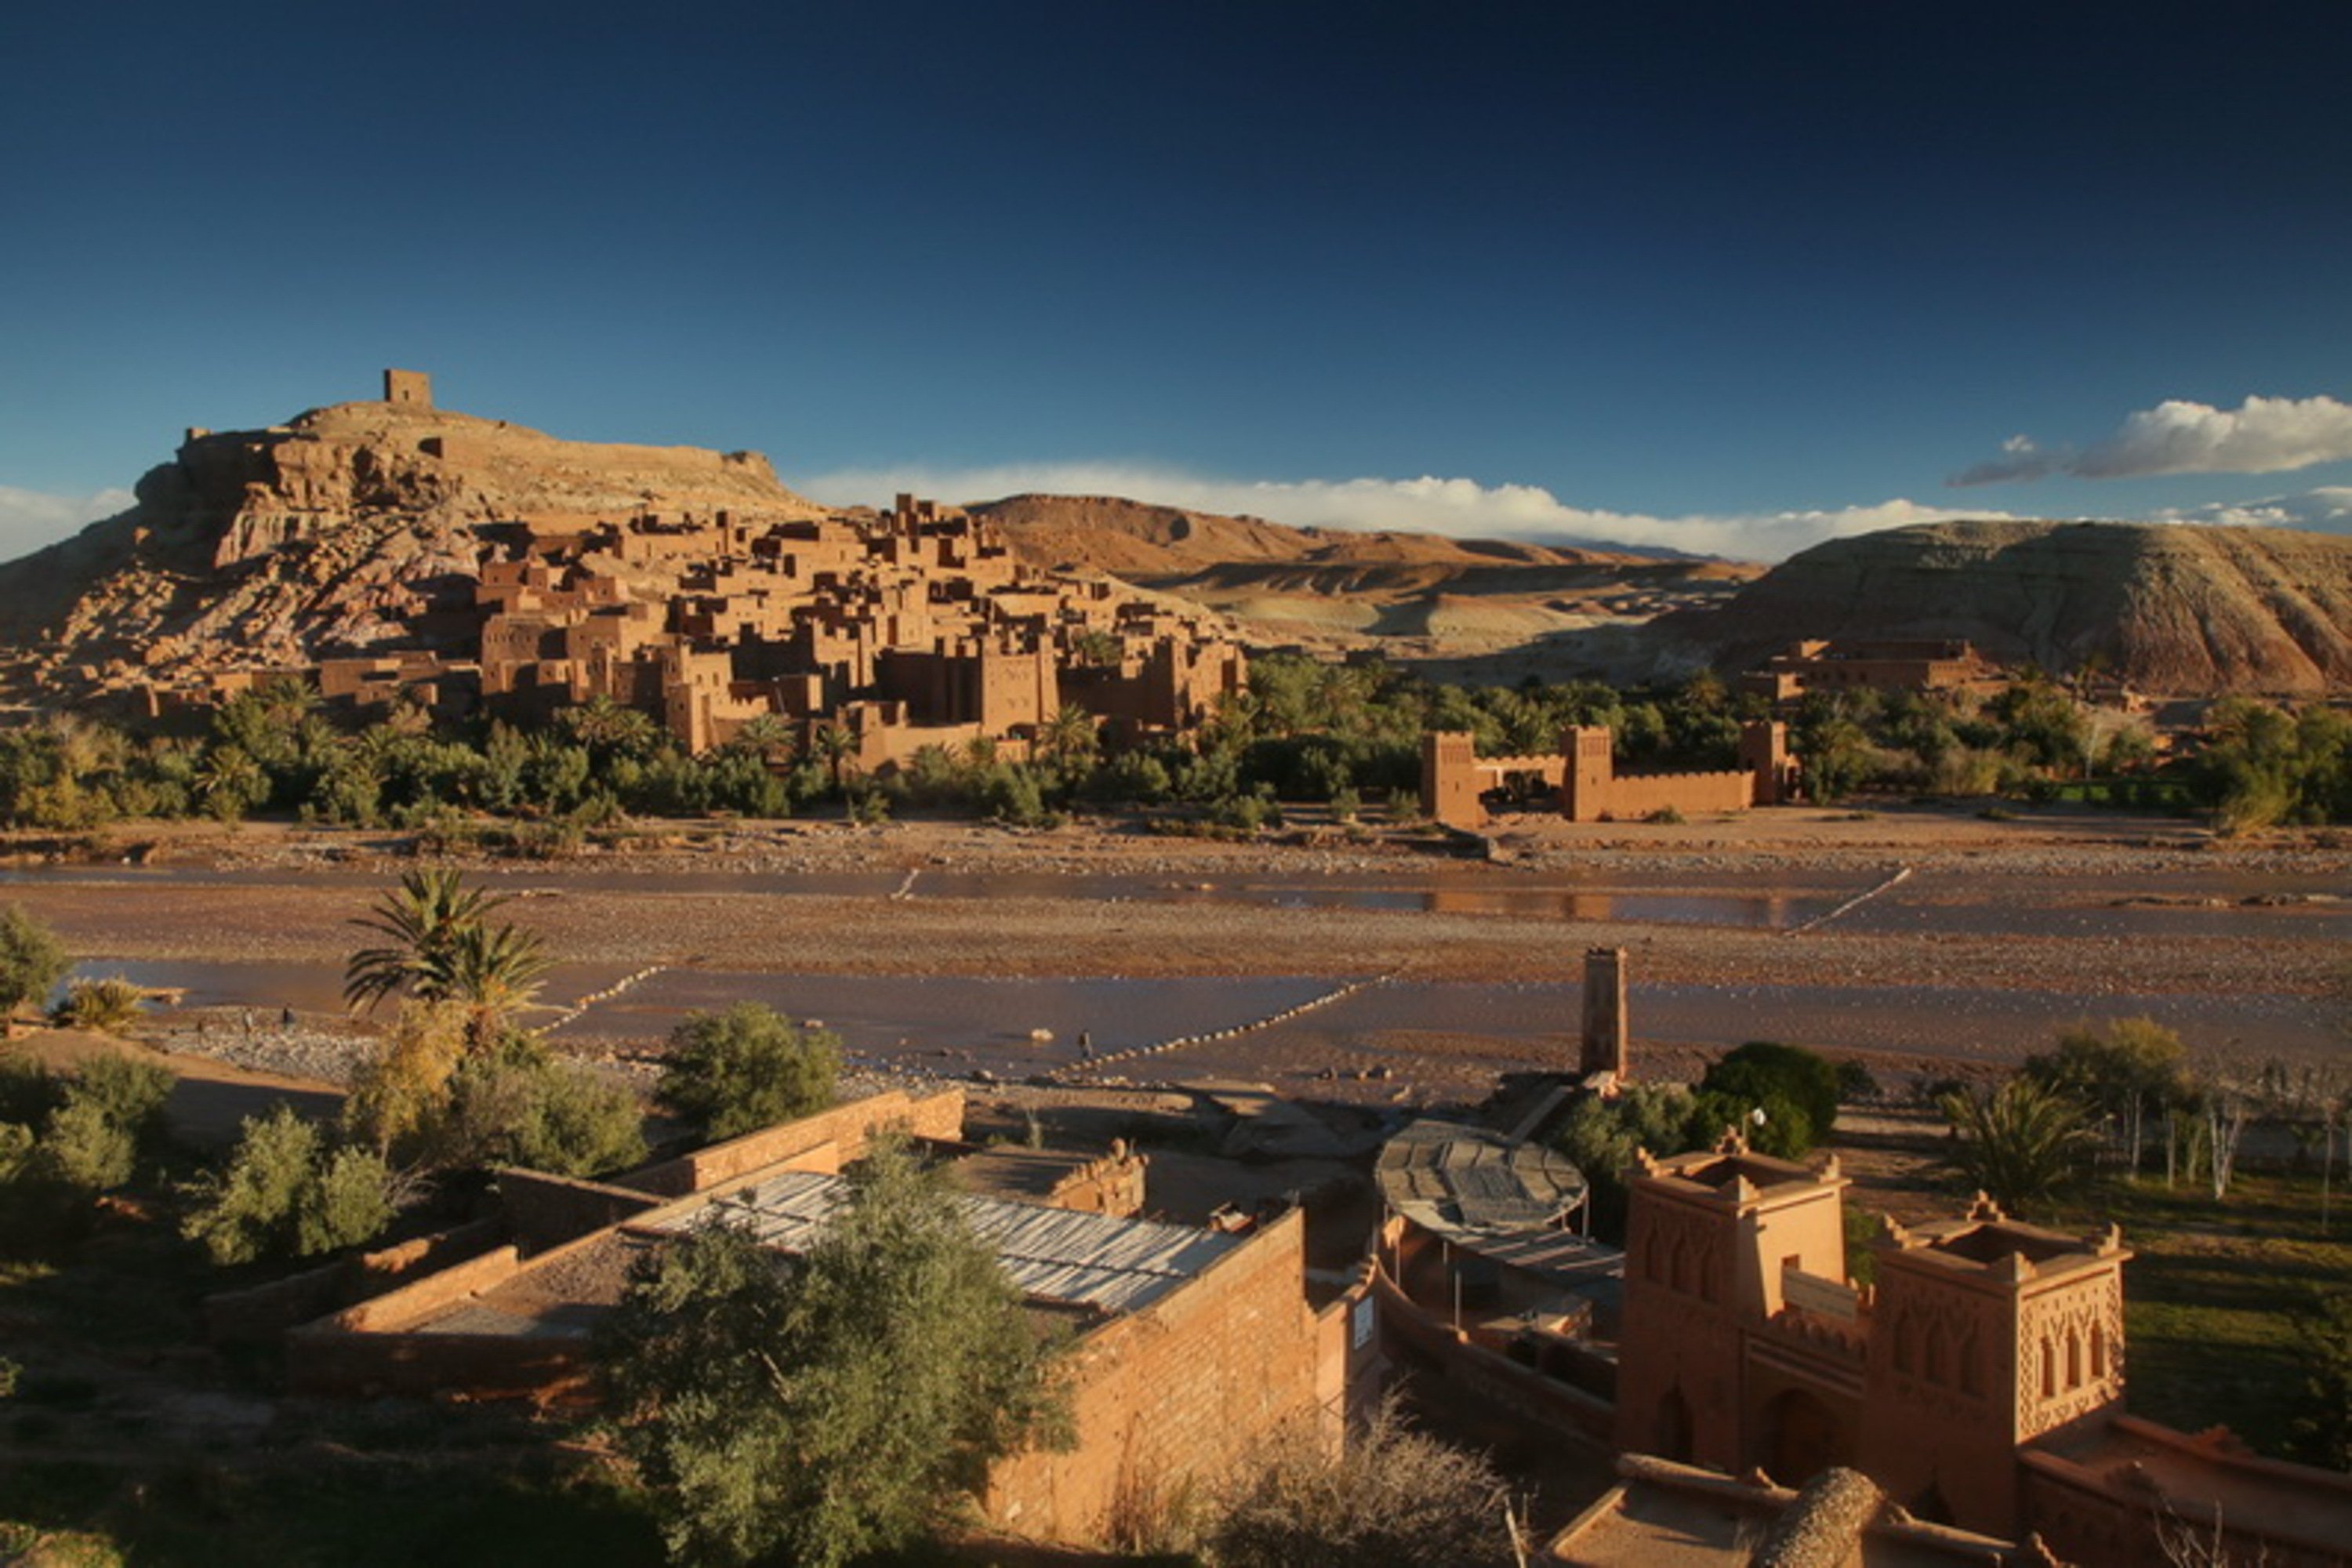 Planet Explorer 5 Marocco: quarta puntata